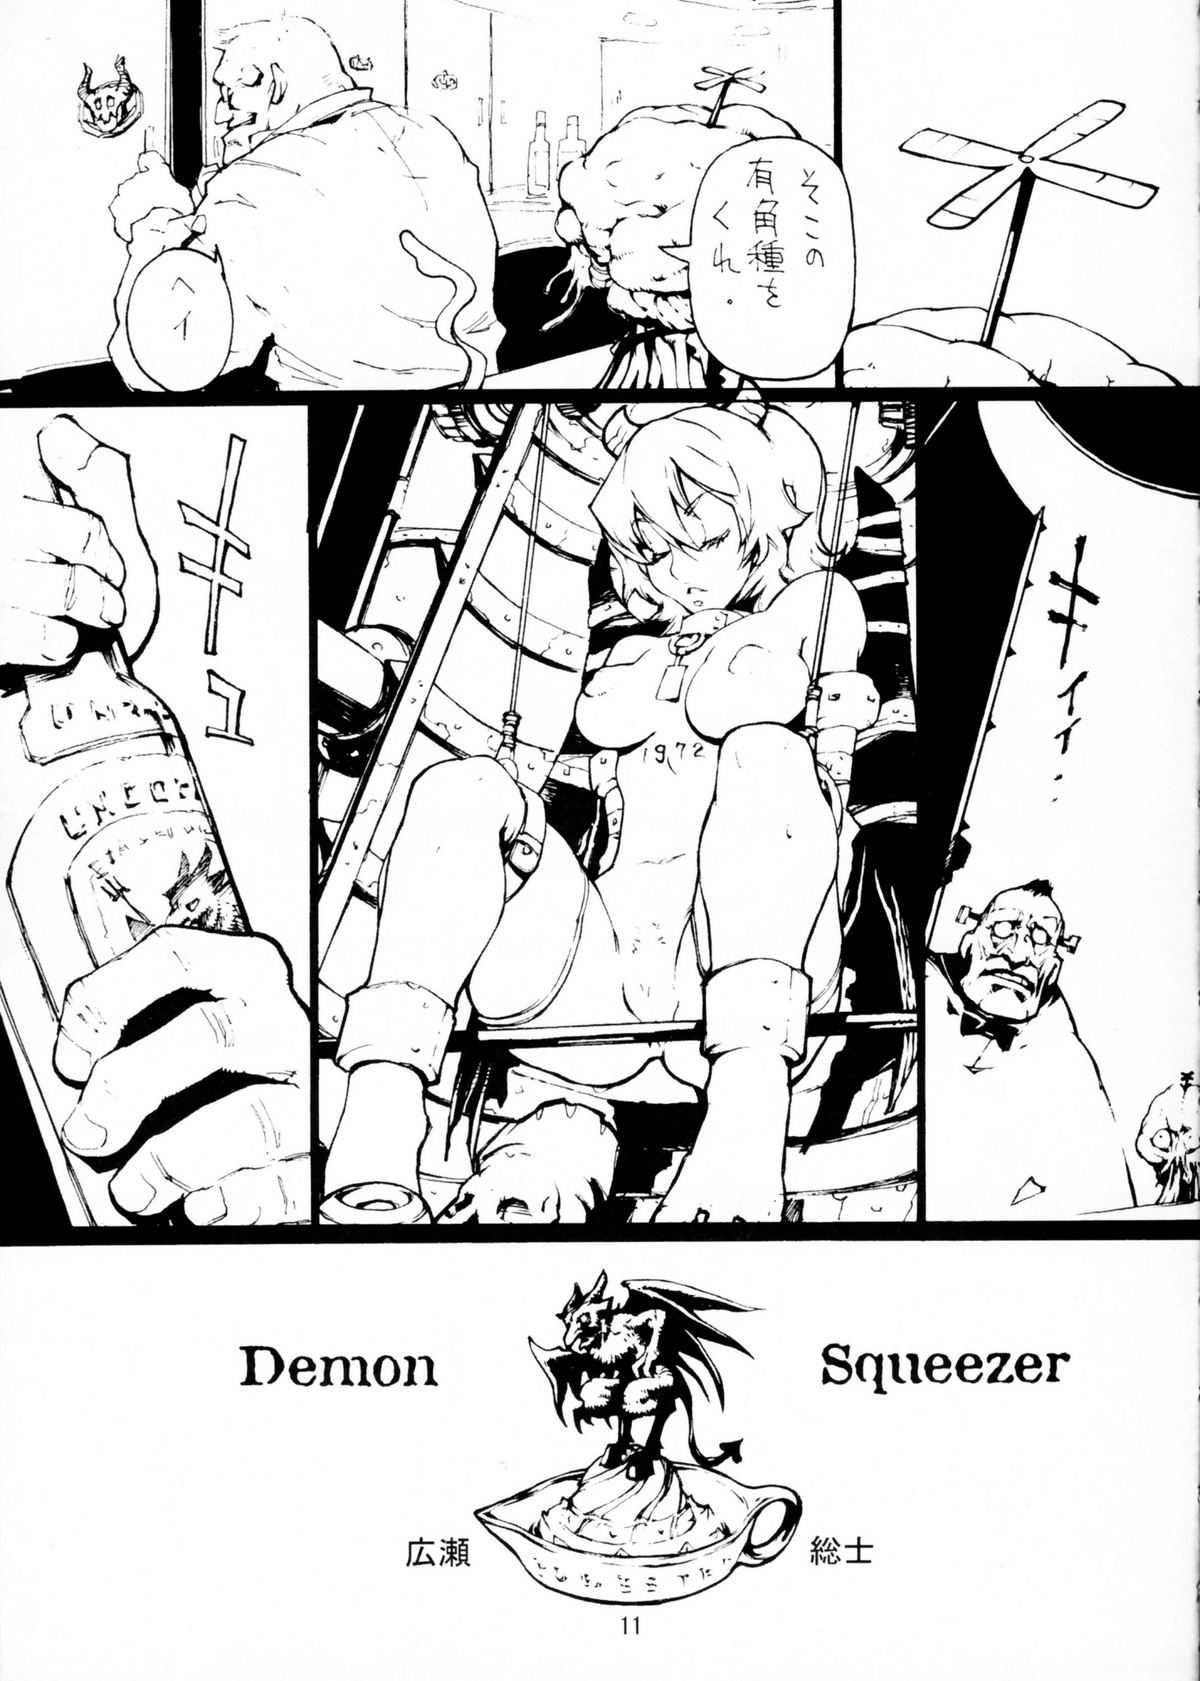 Soushi Hirose - Demon Squeezer 